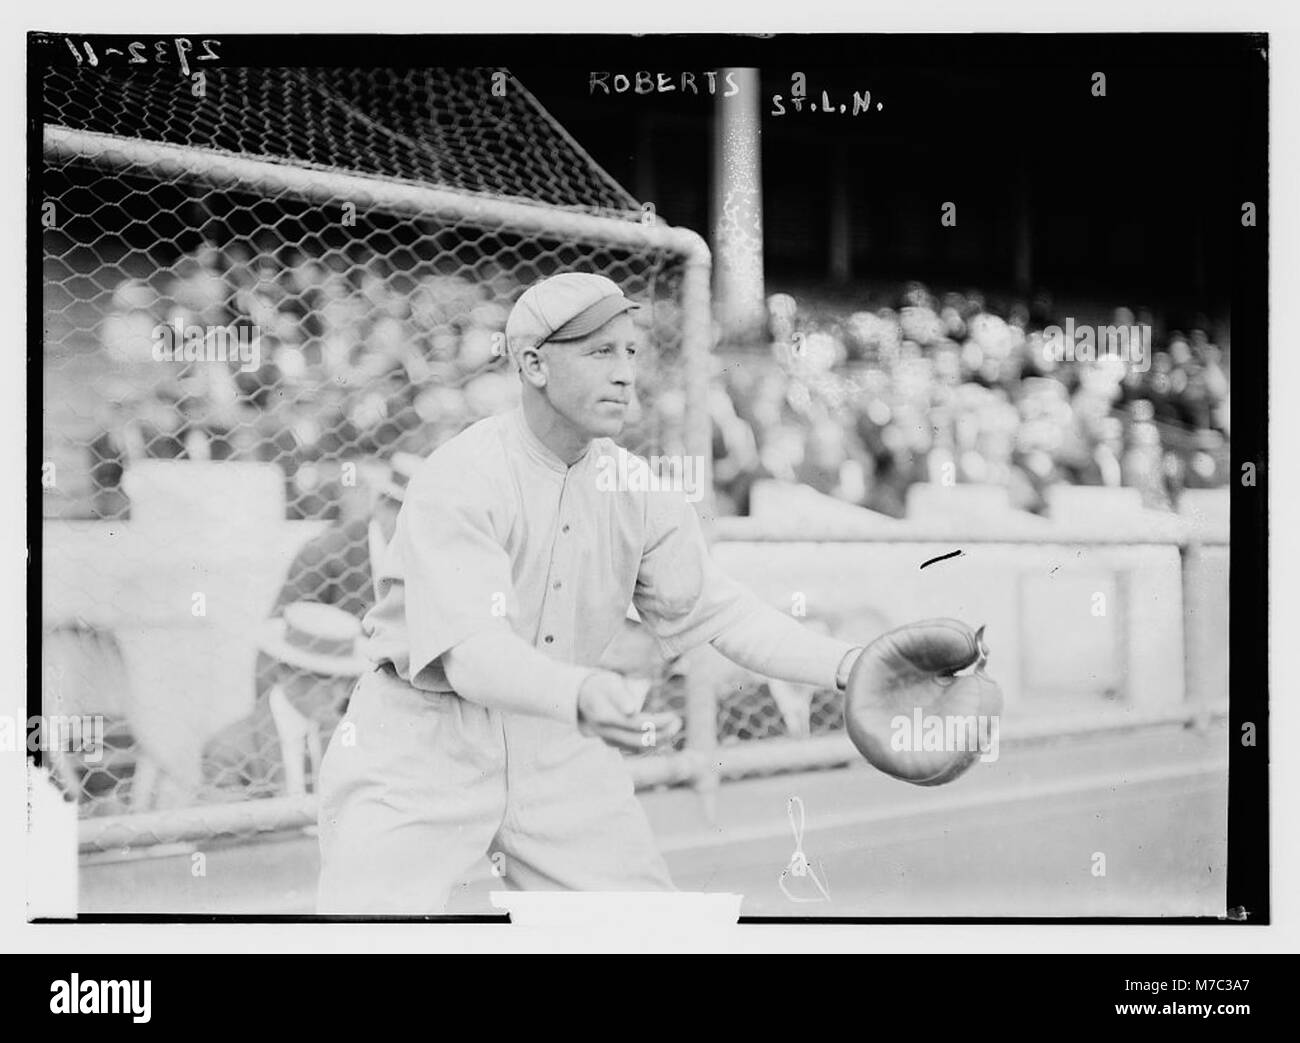 Clarence 'Skipper' Roberts, Saint Louis (NL) base-ball RCAC2014694967 Banque D'Images